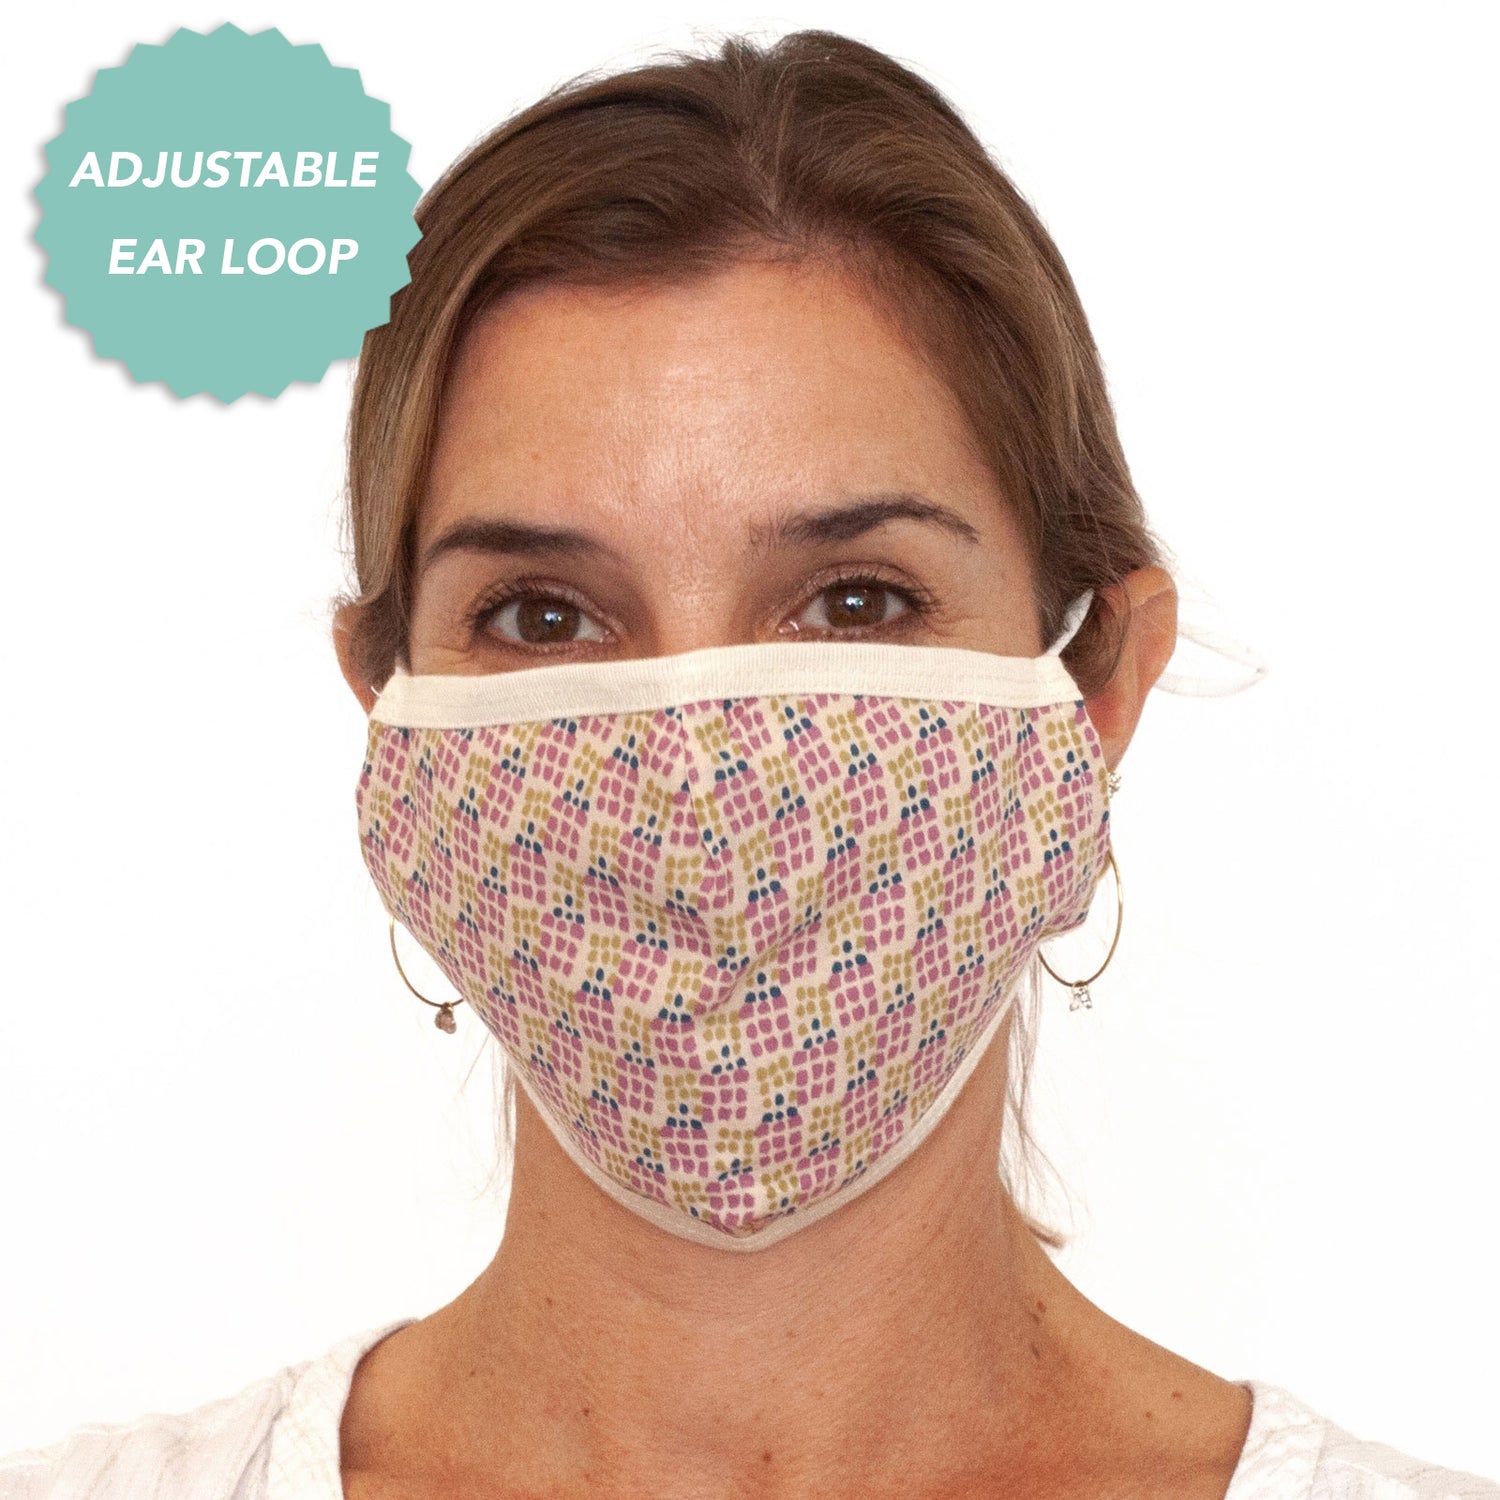 Face Mask LV design washable reusbale breathable fit comfortable